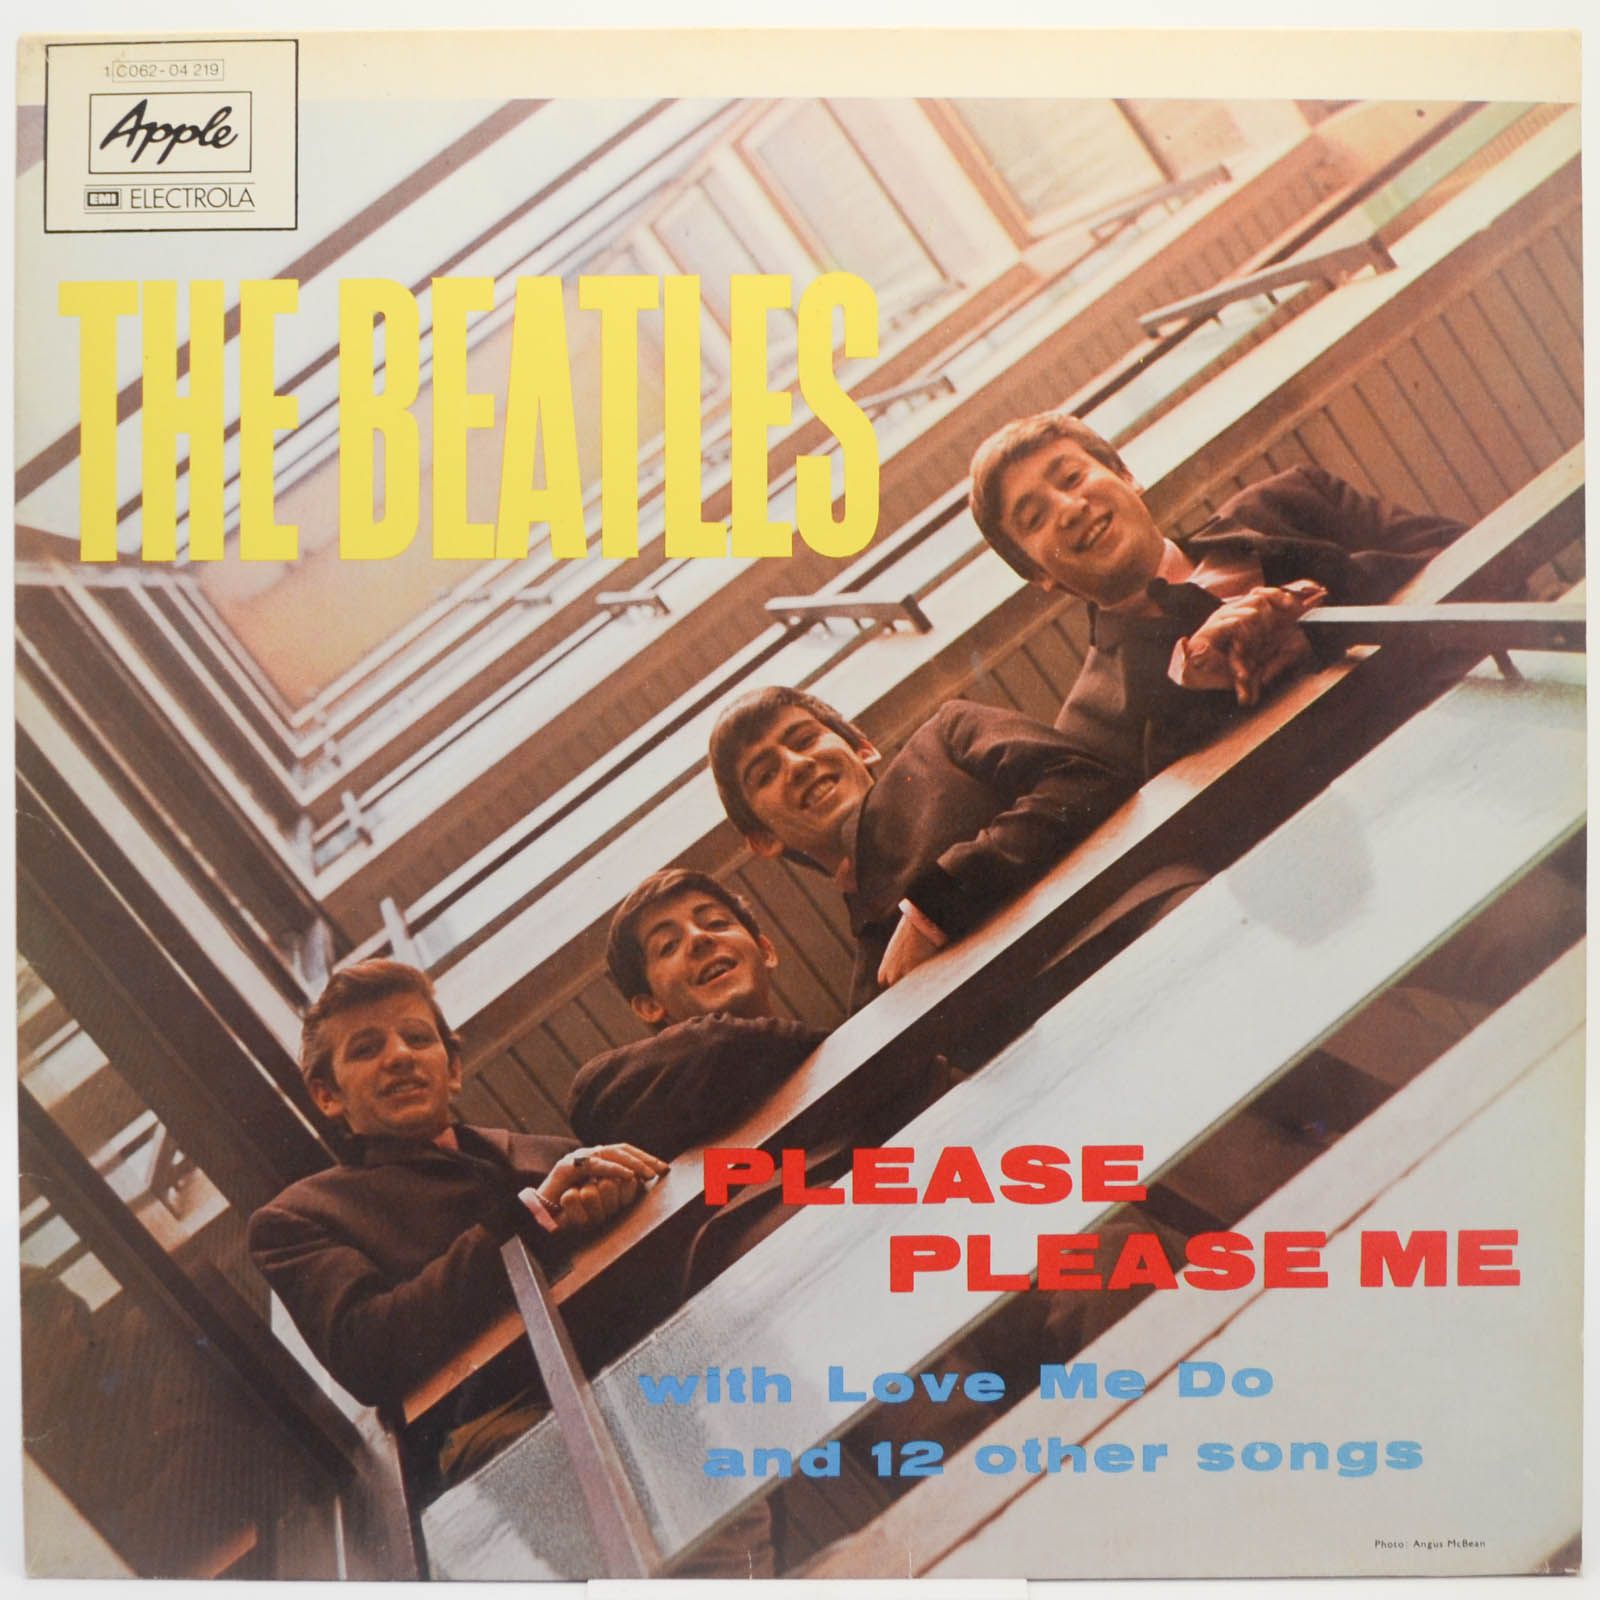 Beatles — Please Please Me, 1963